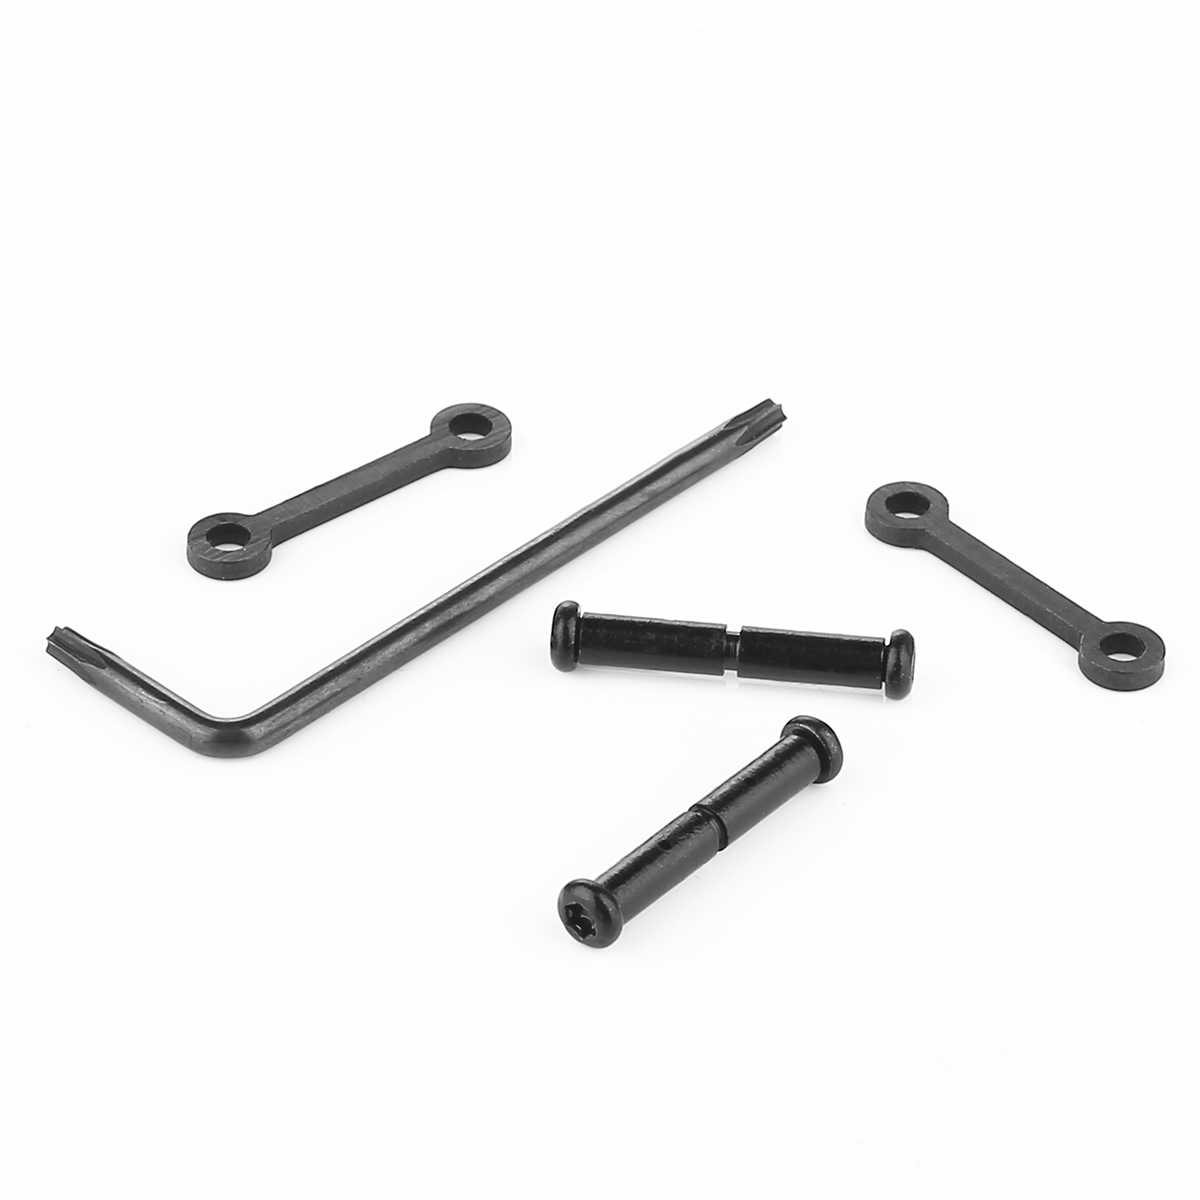 Magorui Black Oxide .154" AR15 Anti Walk Pins 2 Side Plates All Steel Anti Walk Hammer Trigger Pins